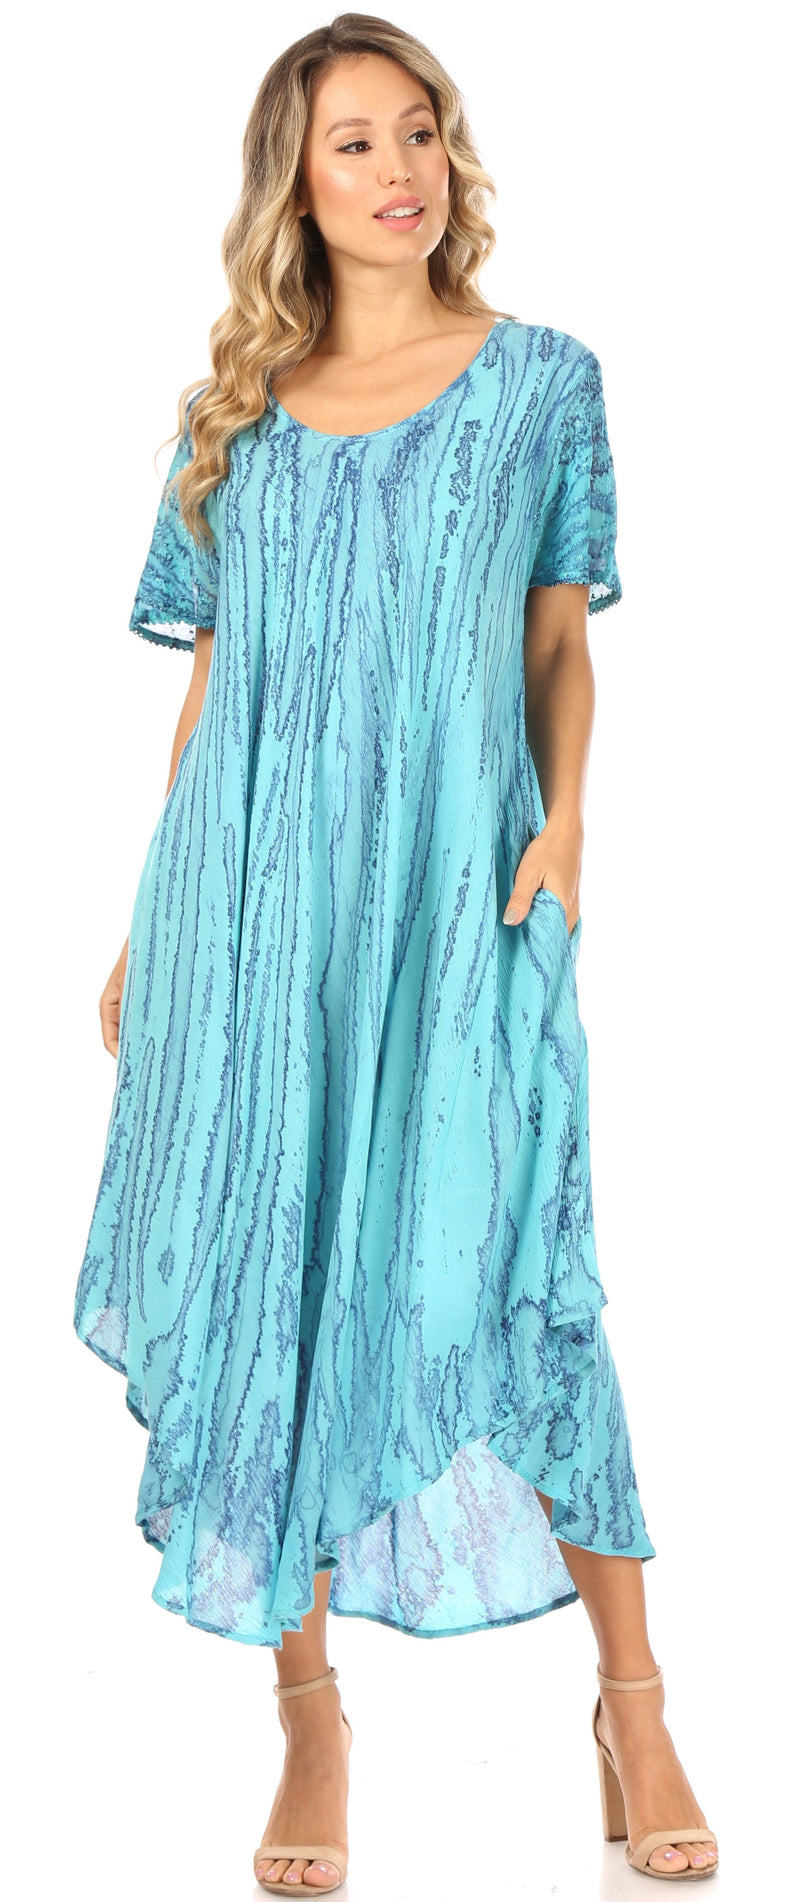 Sakkas Faye Cap Sleeved Rayon Caftan Cover Up Dress